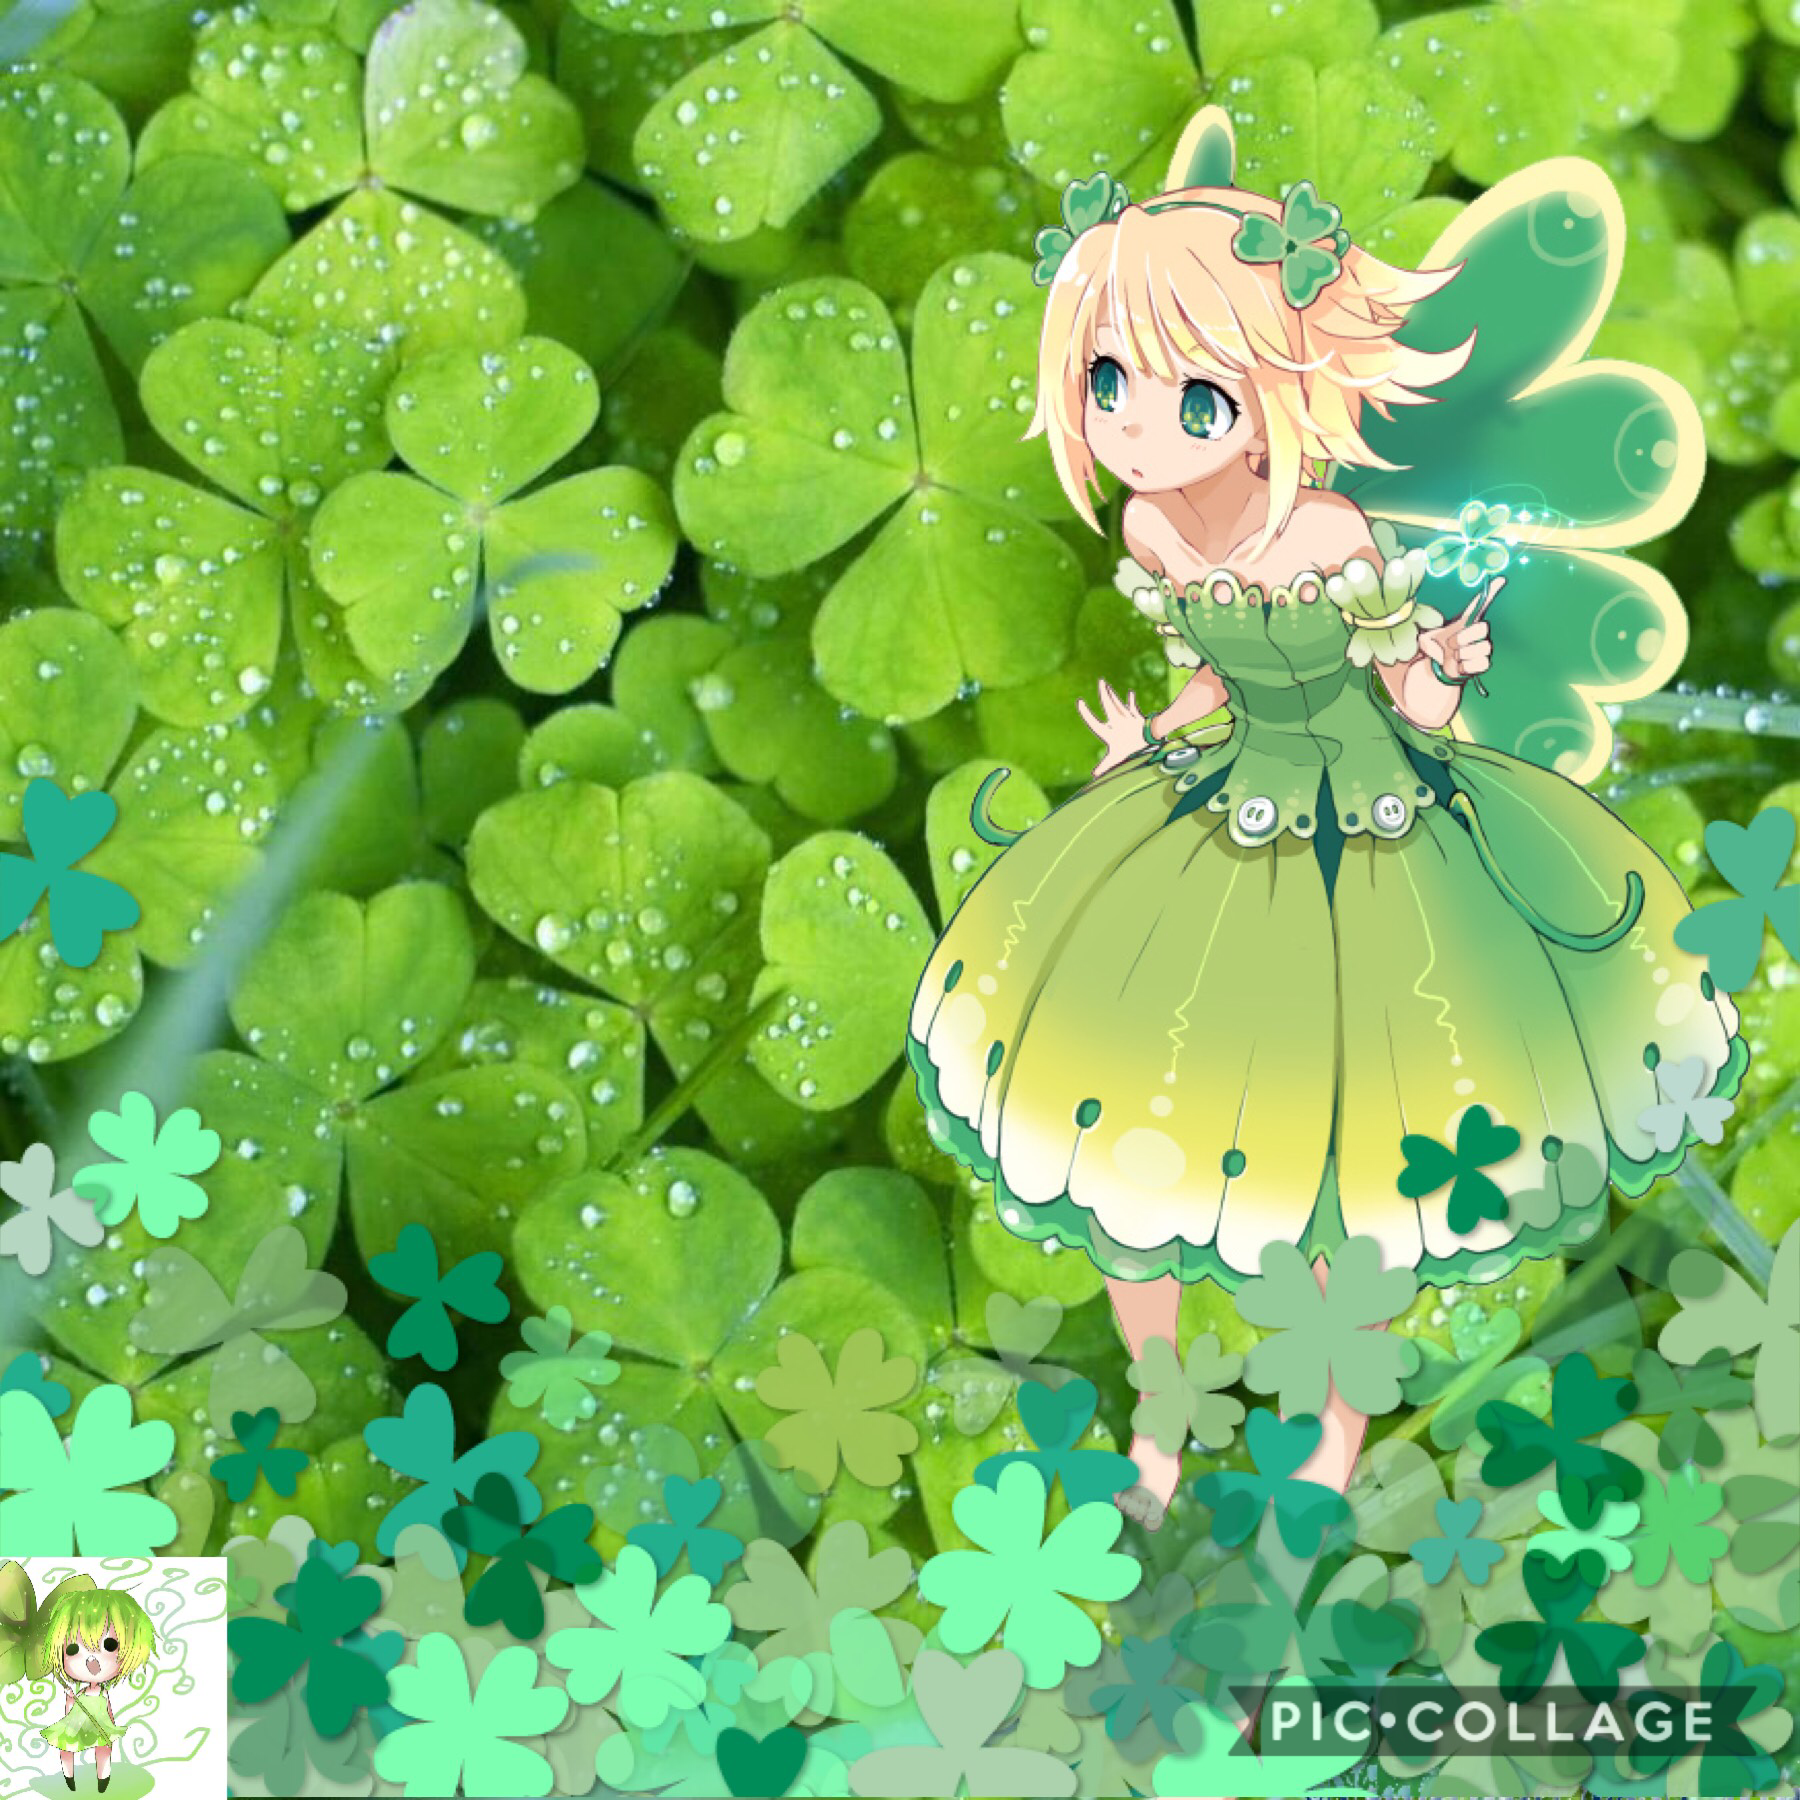 Little cute clovers ❤️ hope you like it